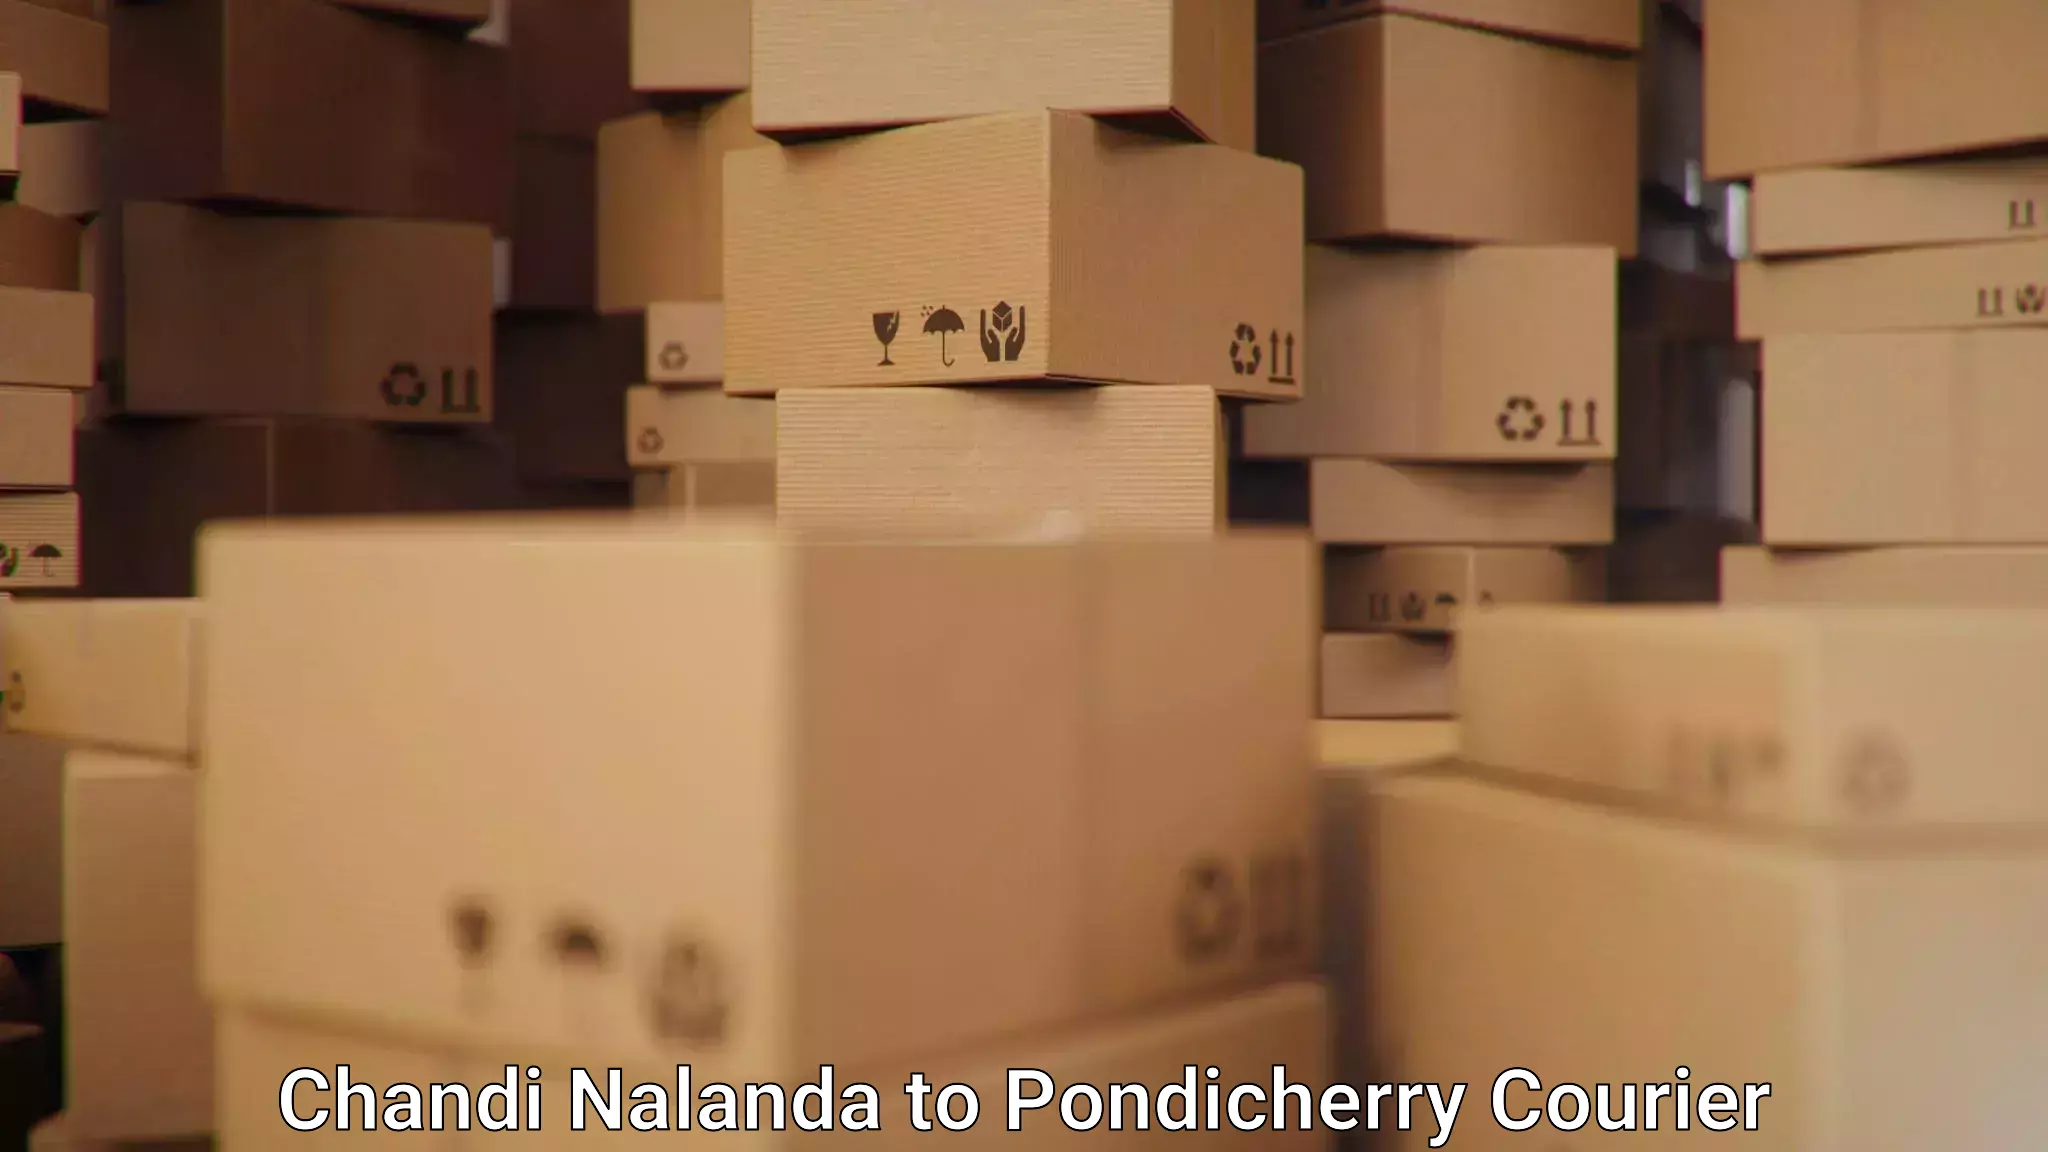 Courier service innovation Chandi Nalanda to Pondicherry